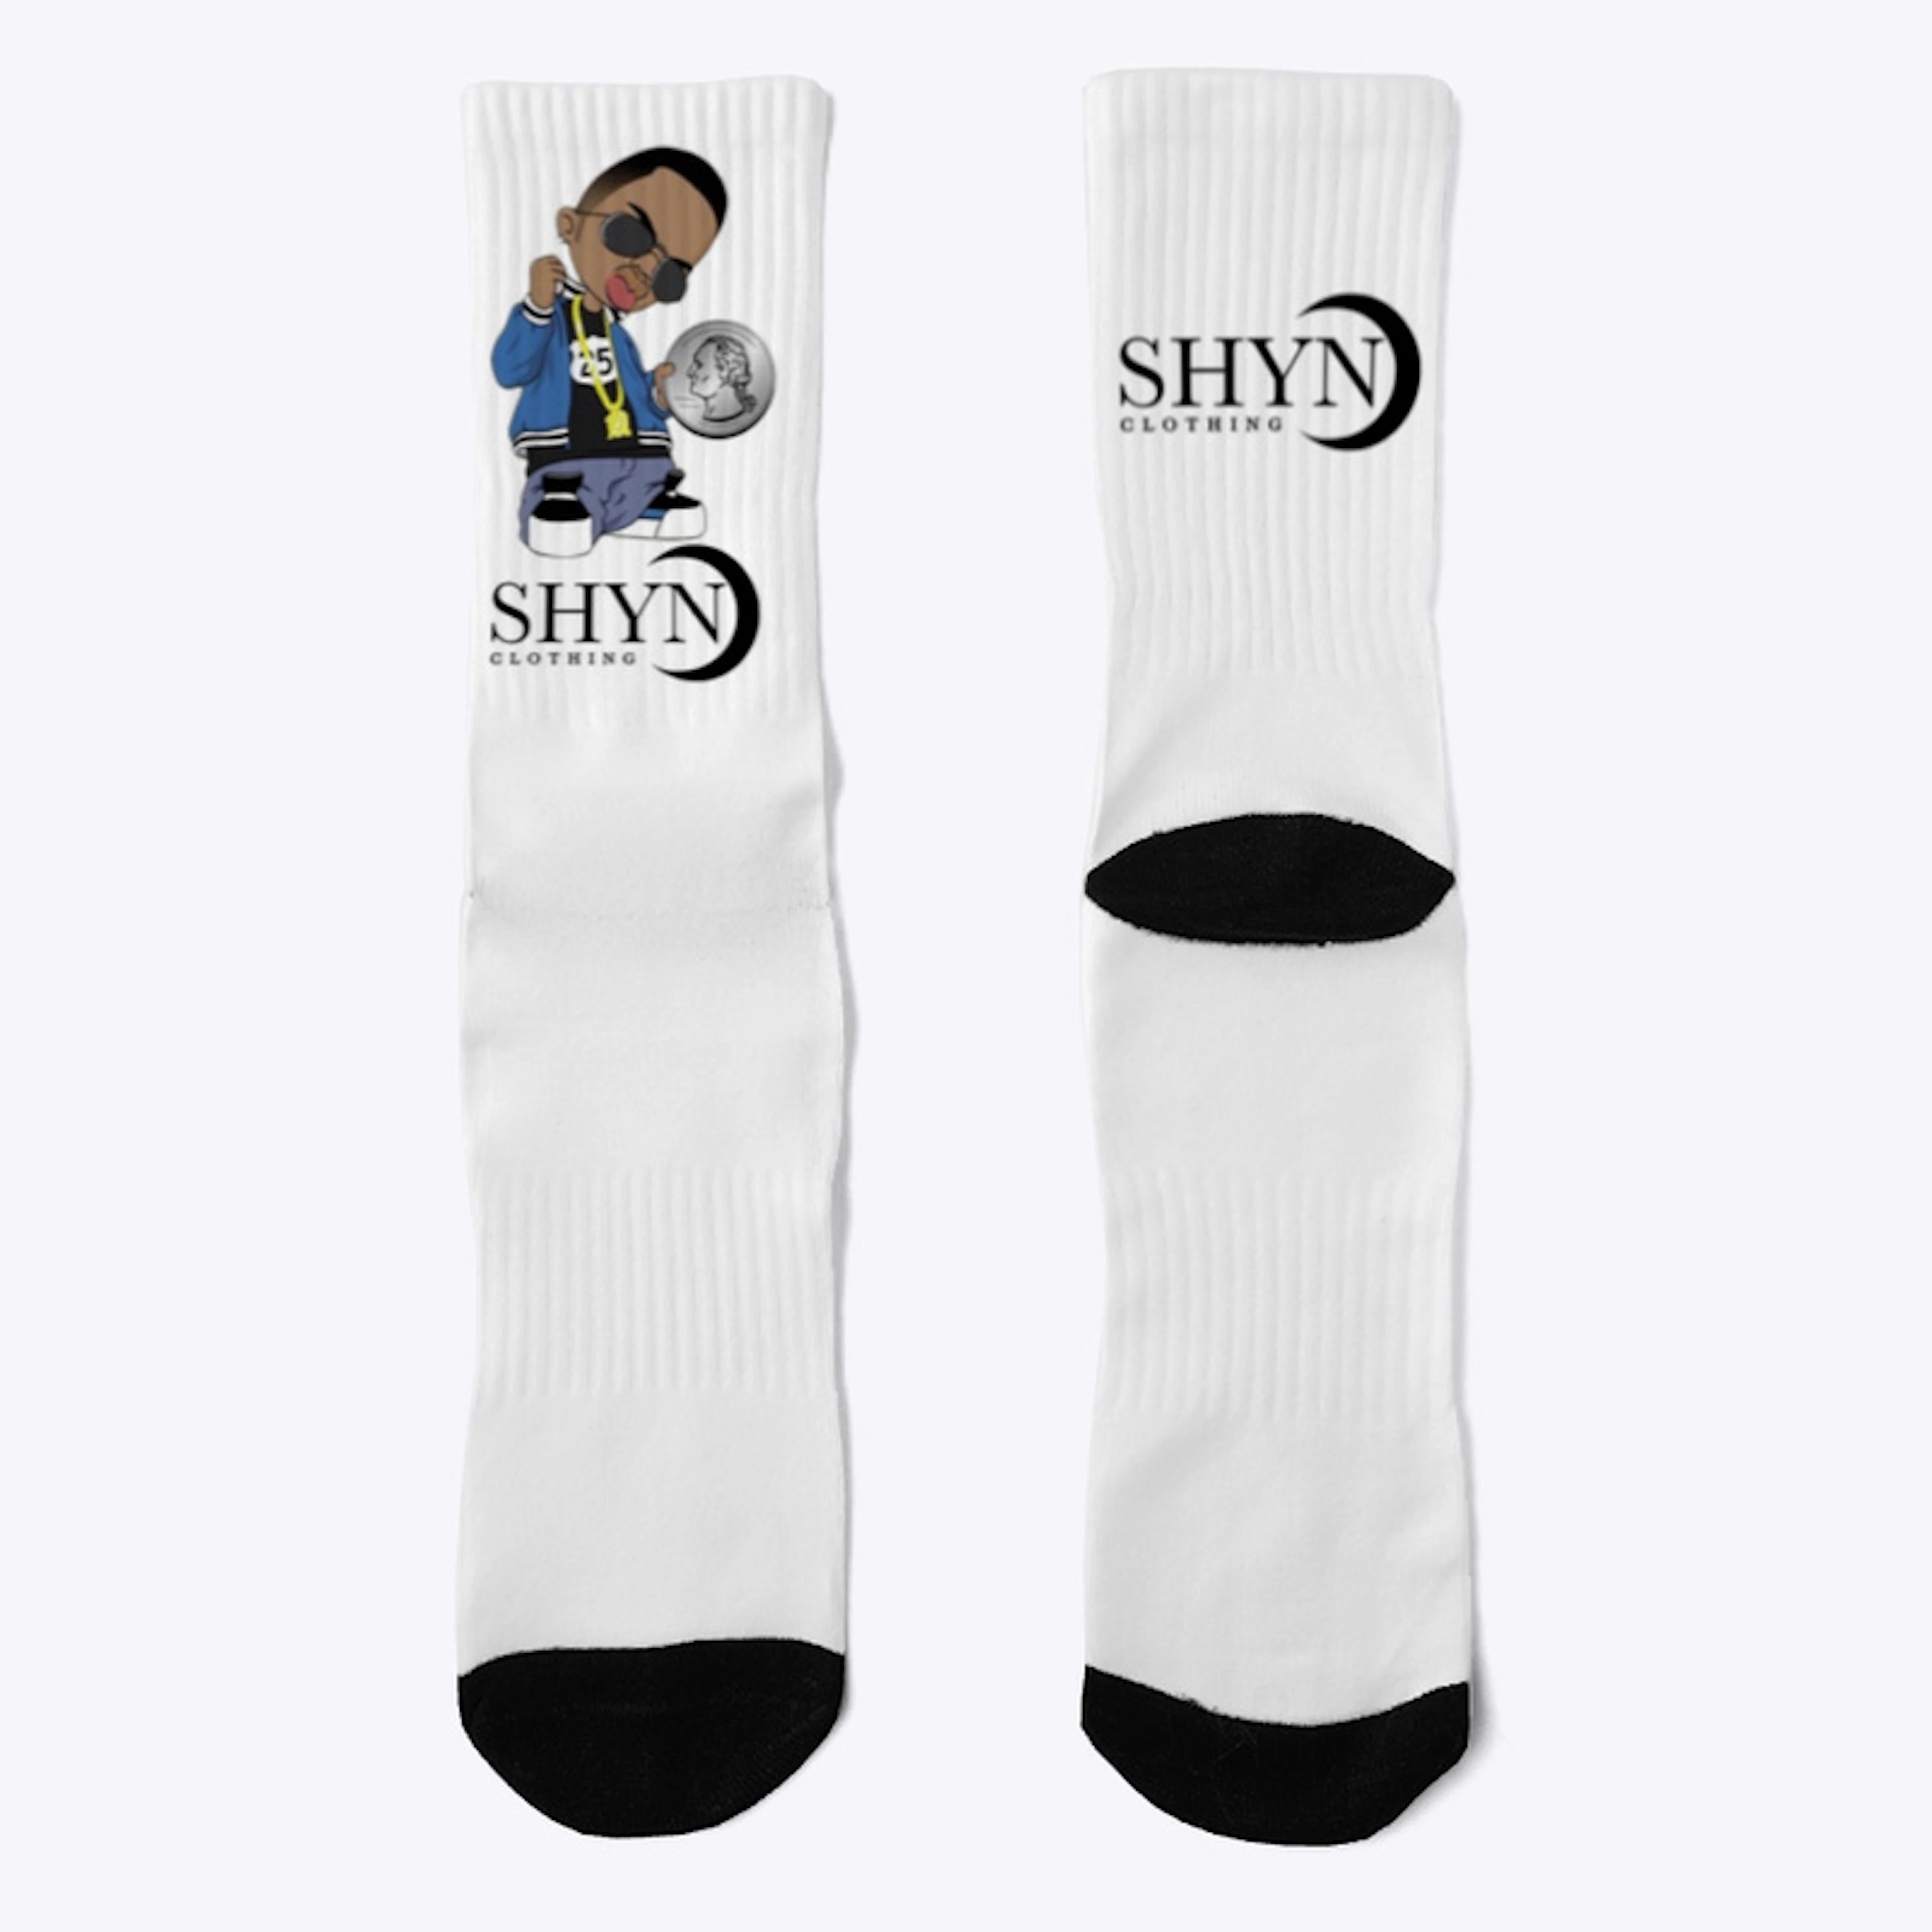 Shyn Quarter Boy Socks and Backpacks 